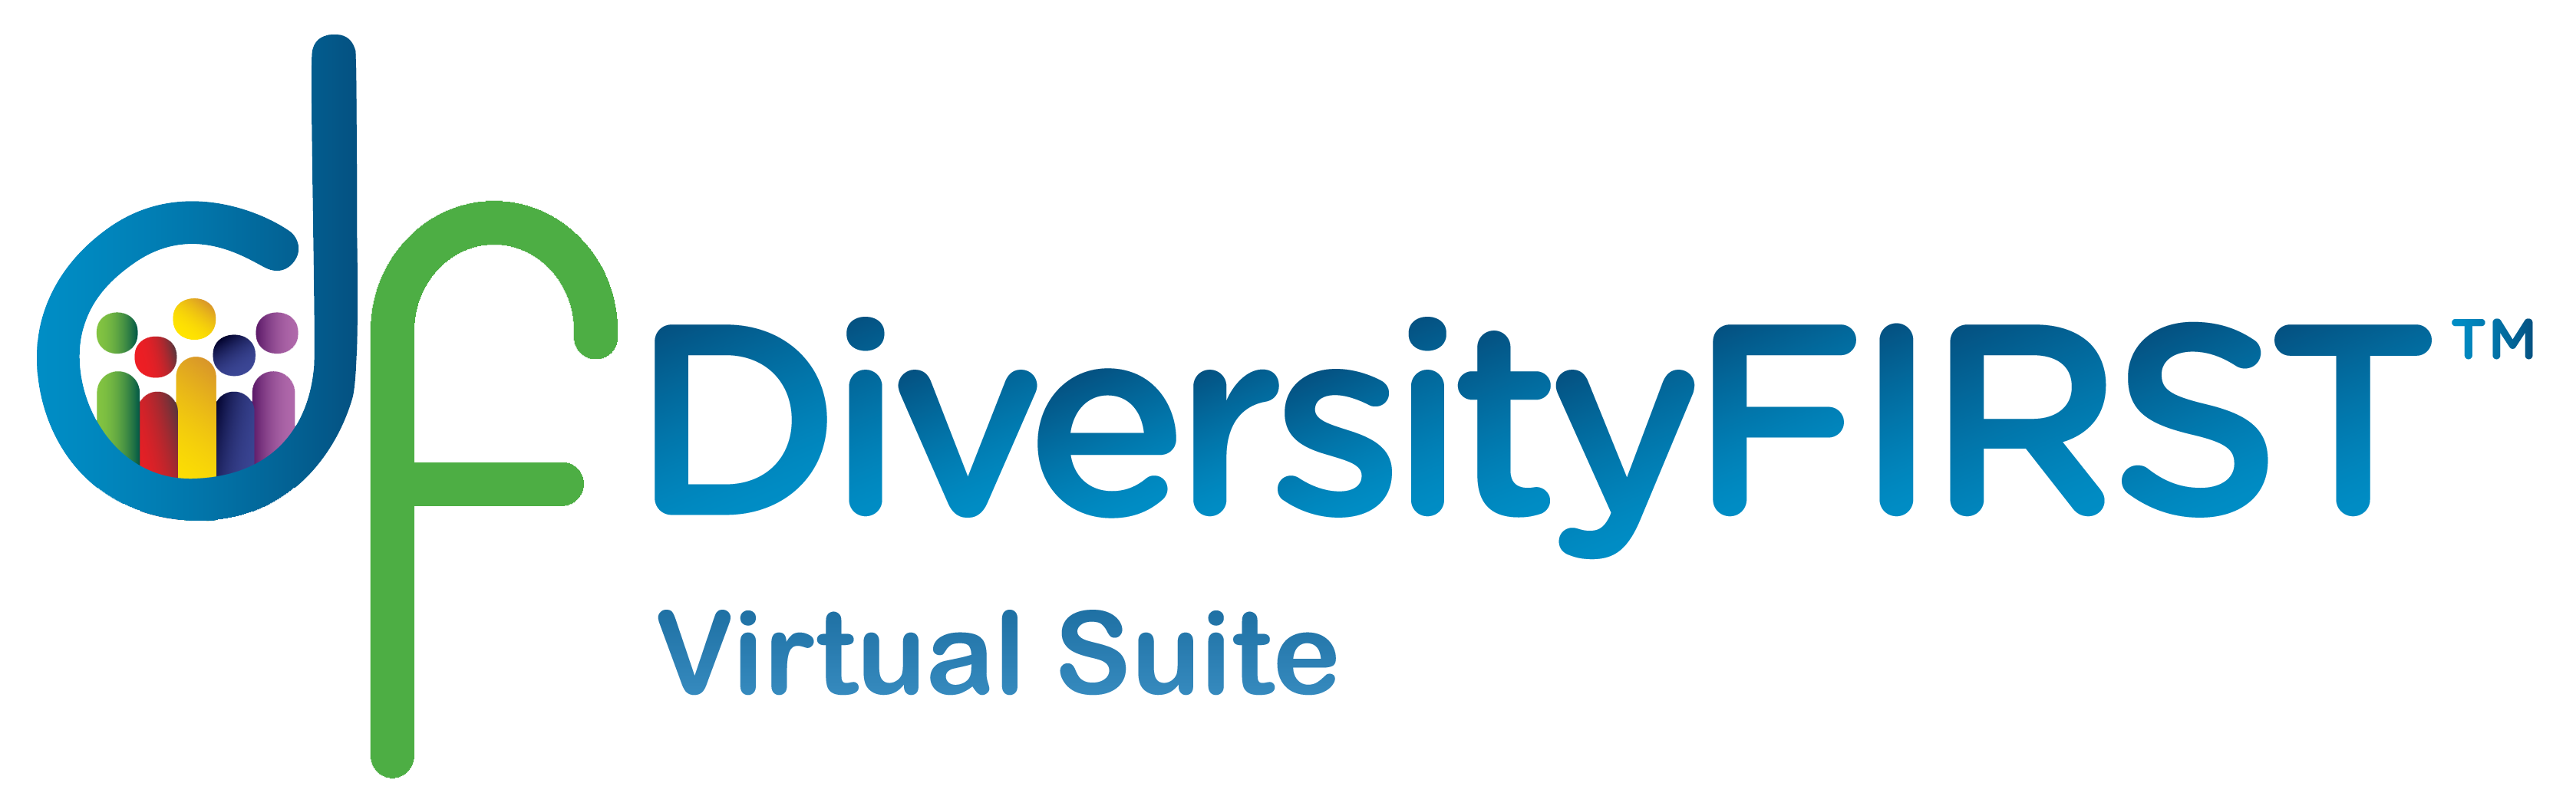 DiversityFIRST™ Virtual Suite